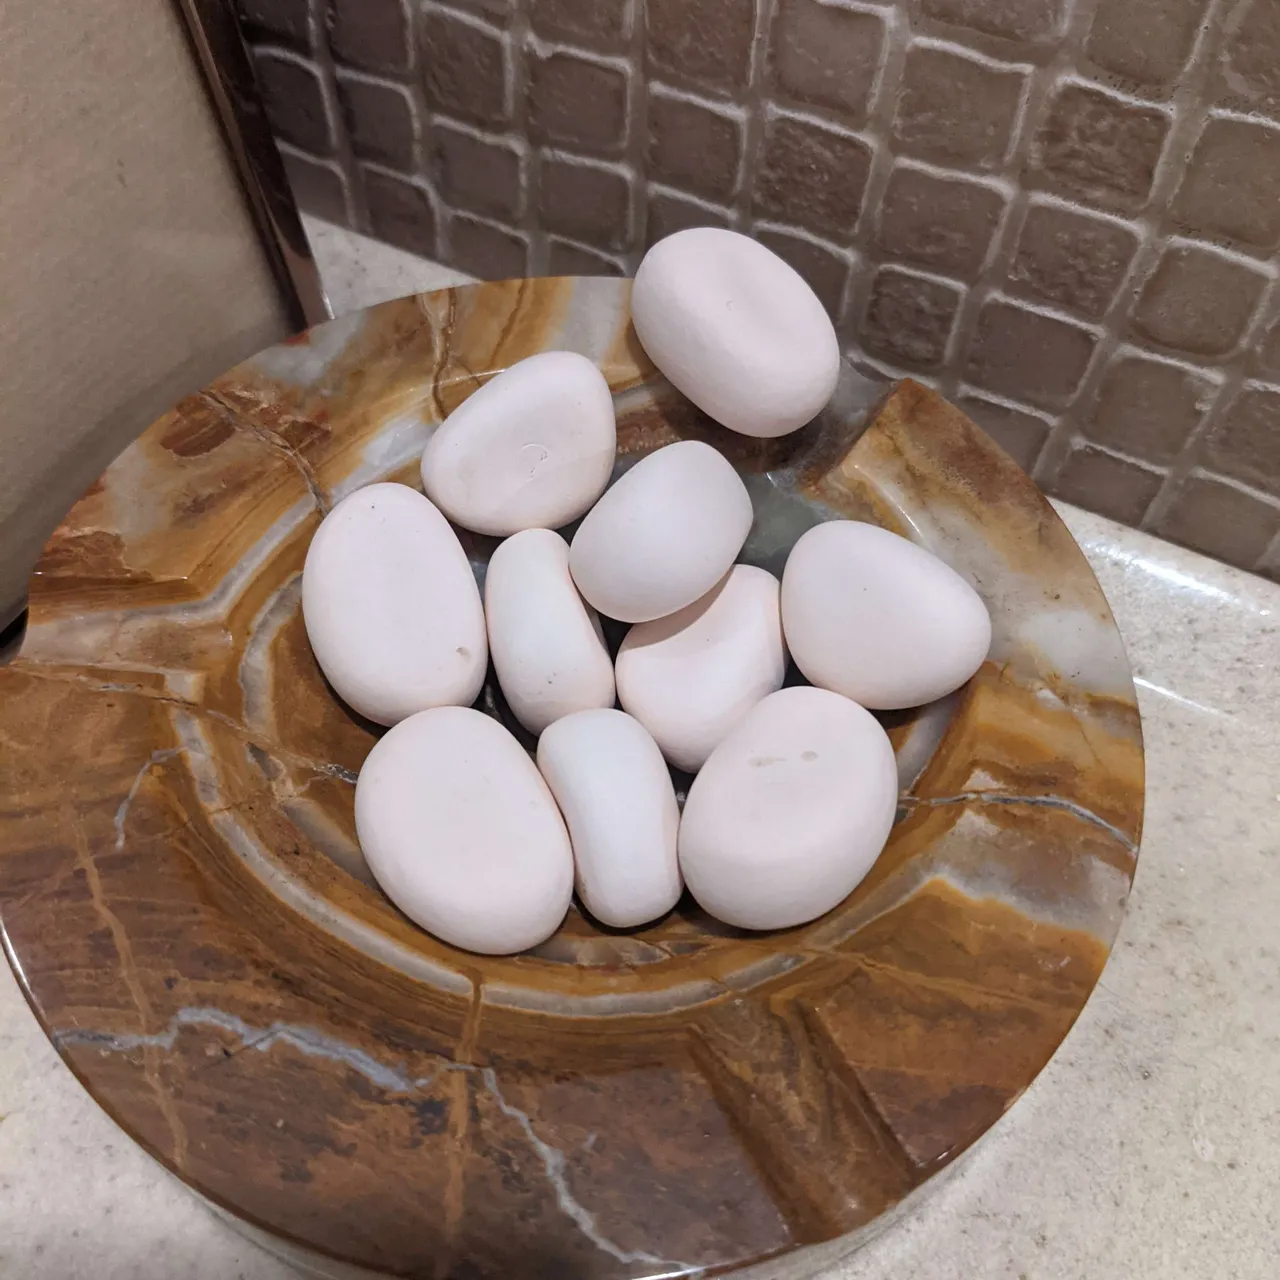 muji unglazed stones for essential oils photo 1